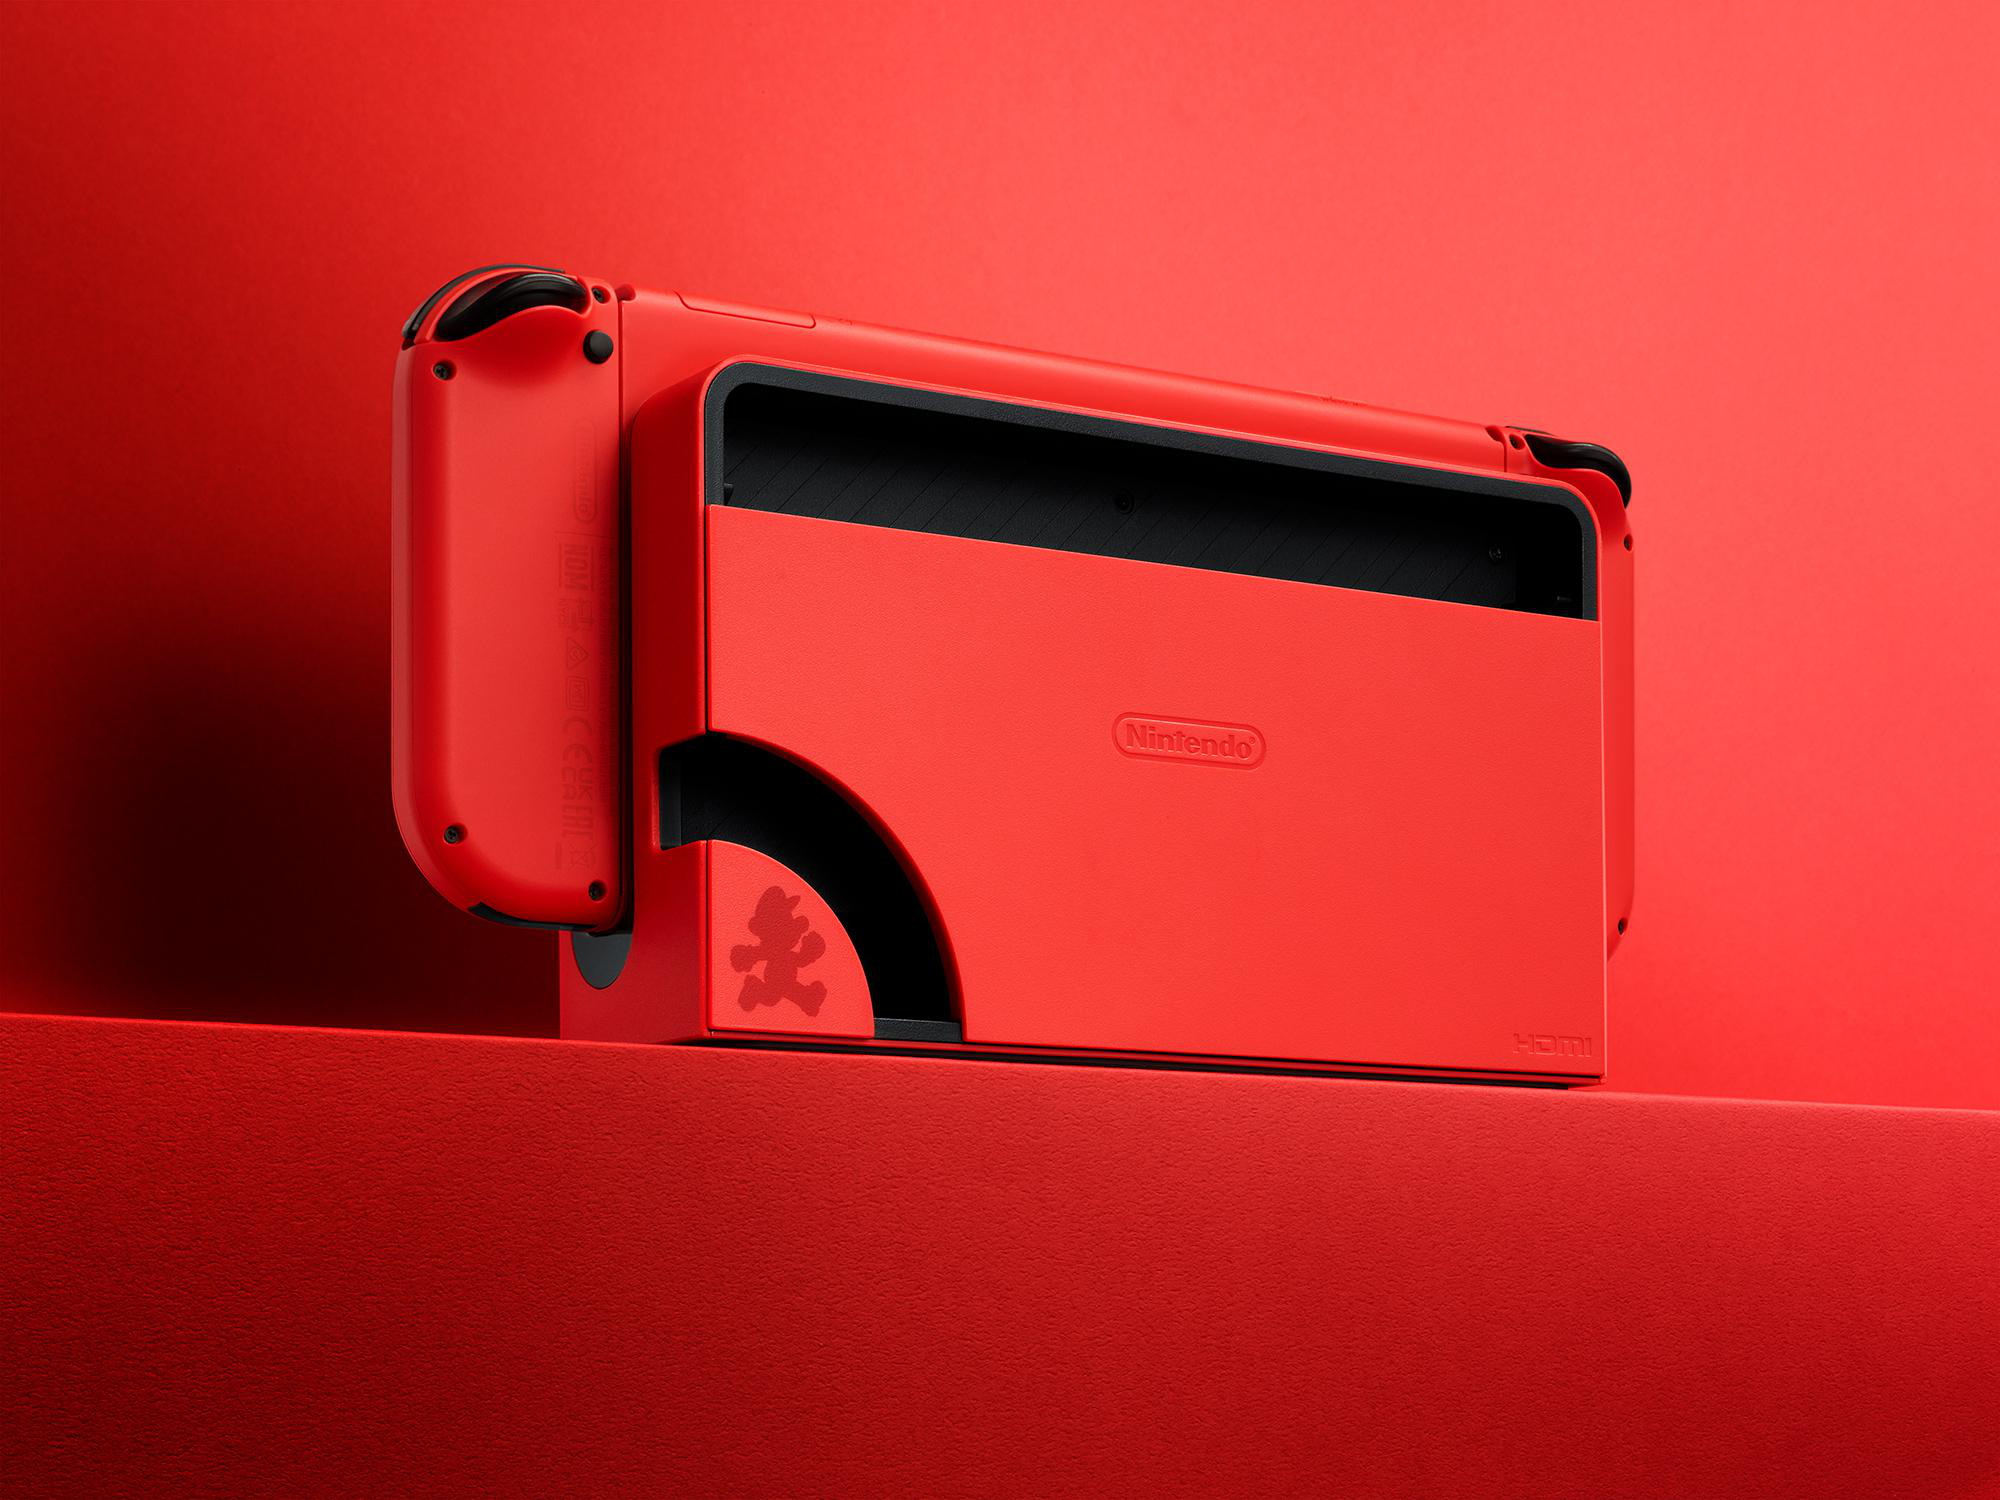 NINTENDO (rot) OLED Modell Mario-Edition Switch